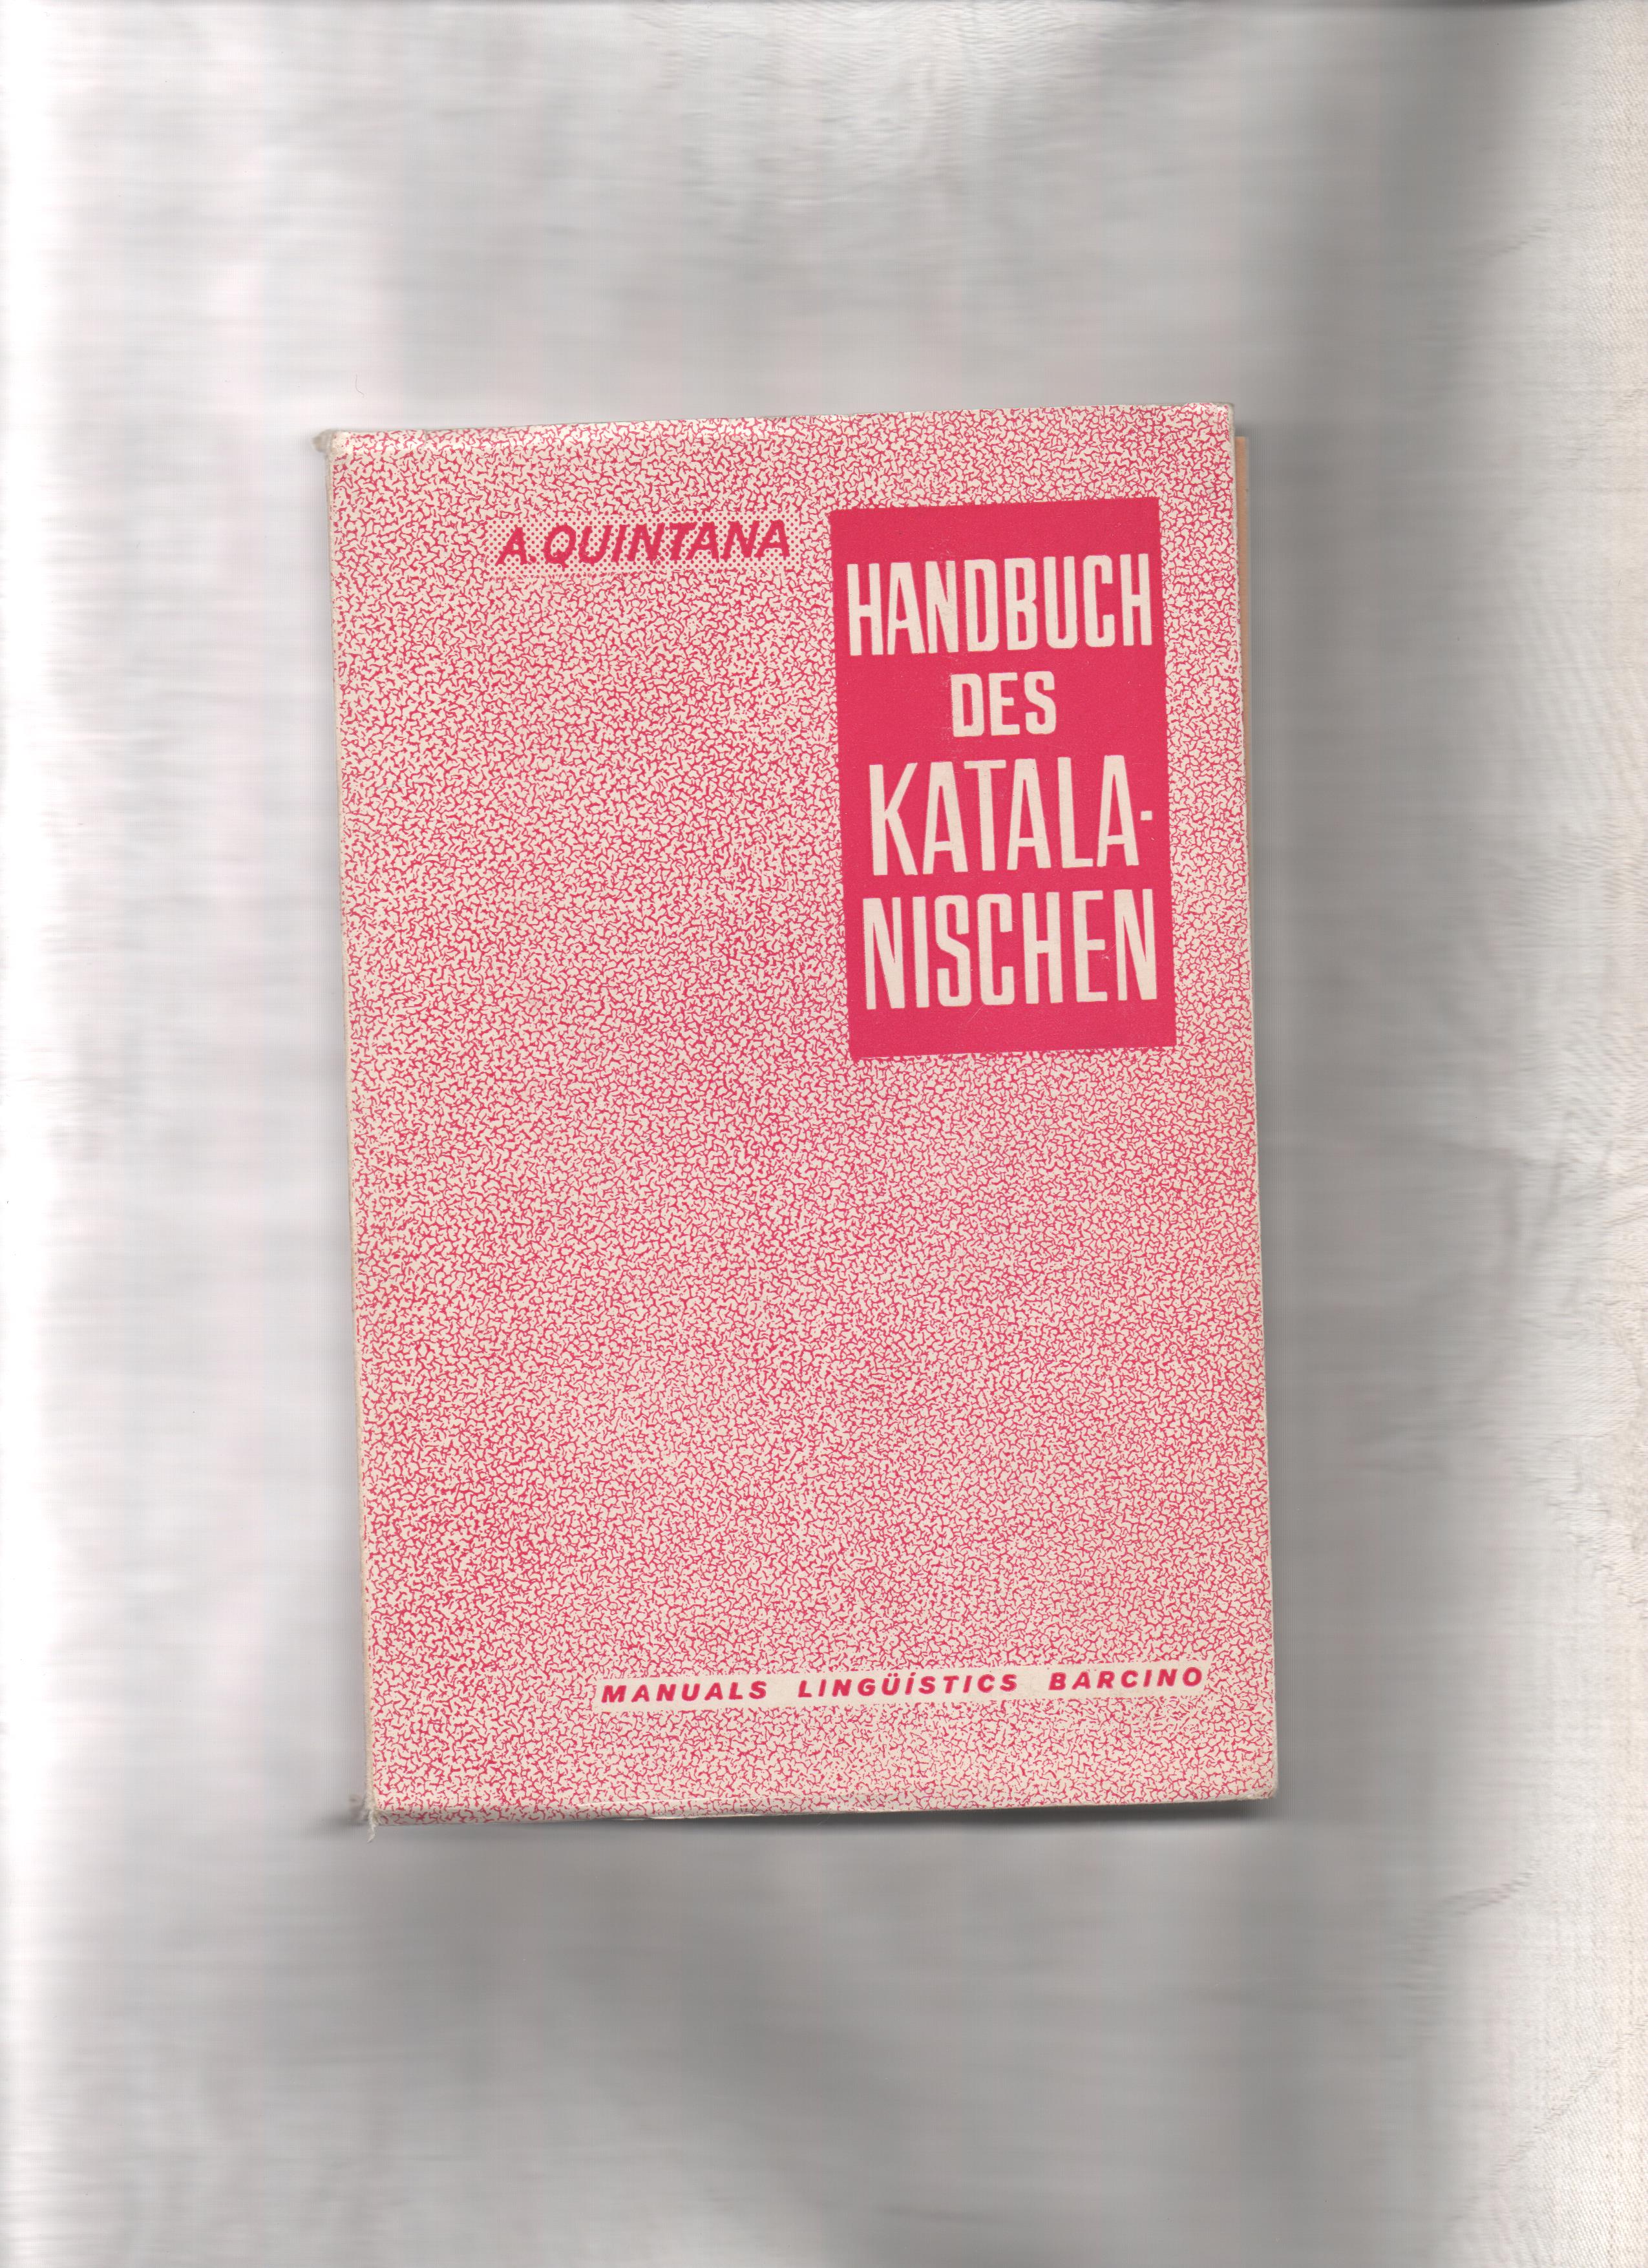 Handbuch des Katalanischen Manuals lingüistics Barcino, 7 - Quintana, A.